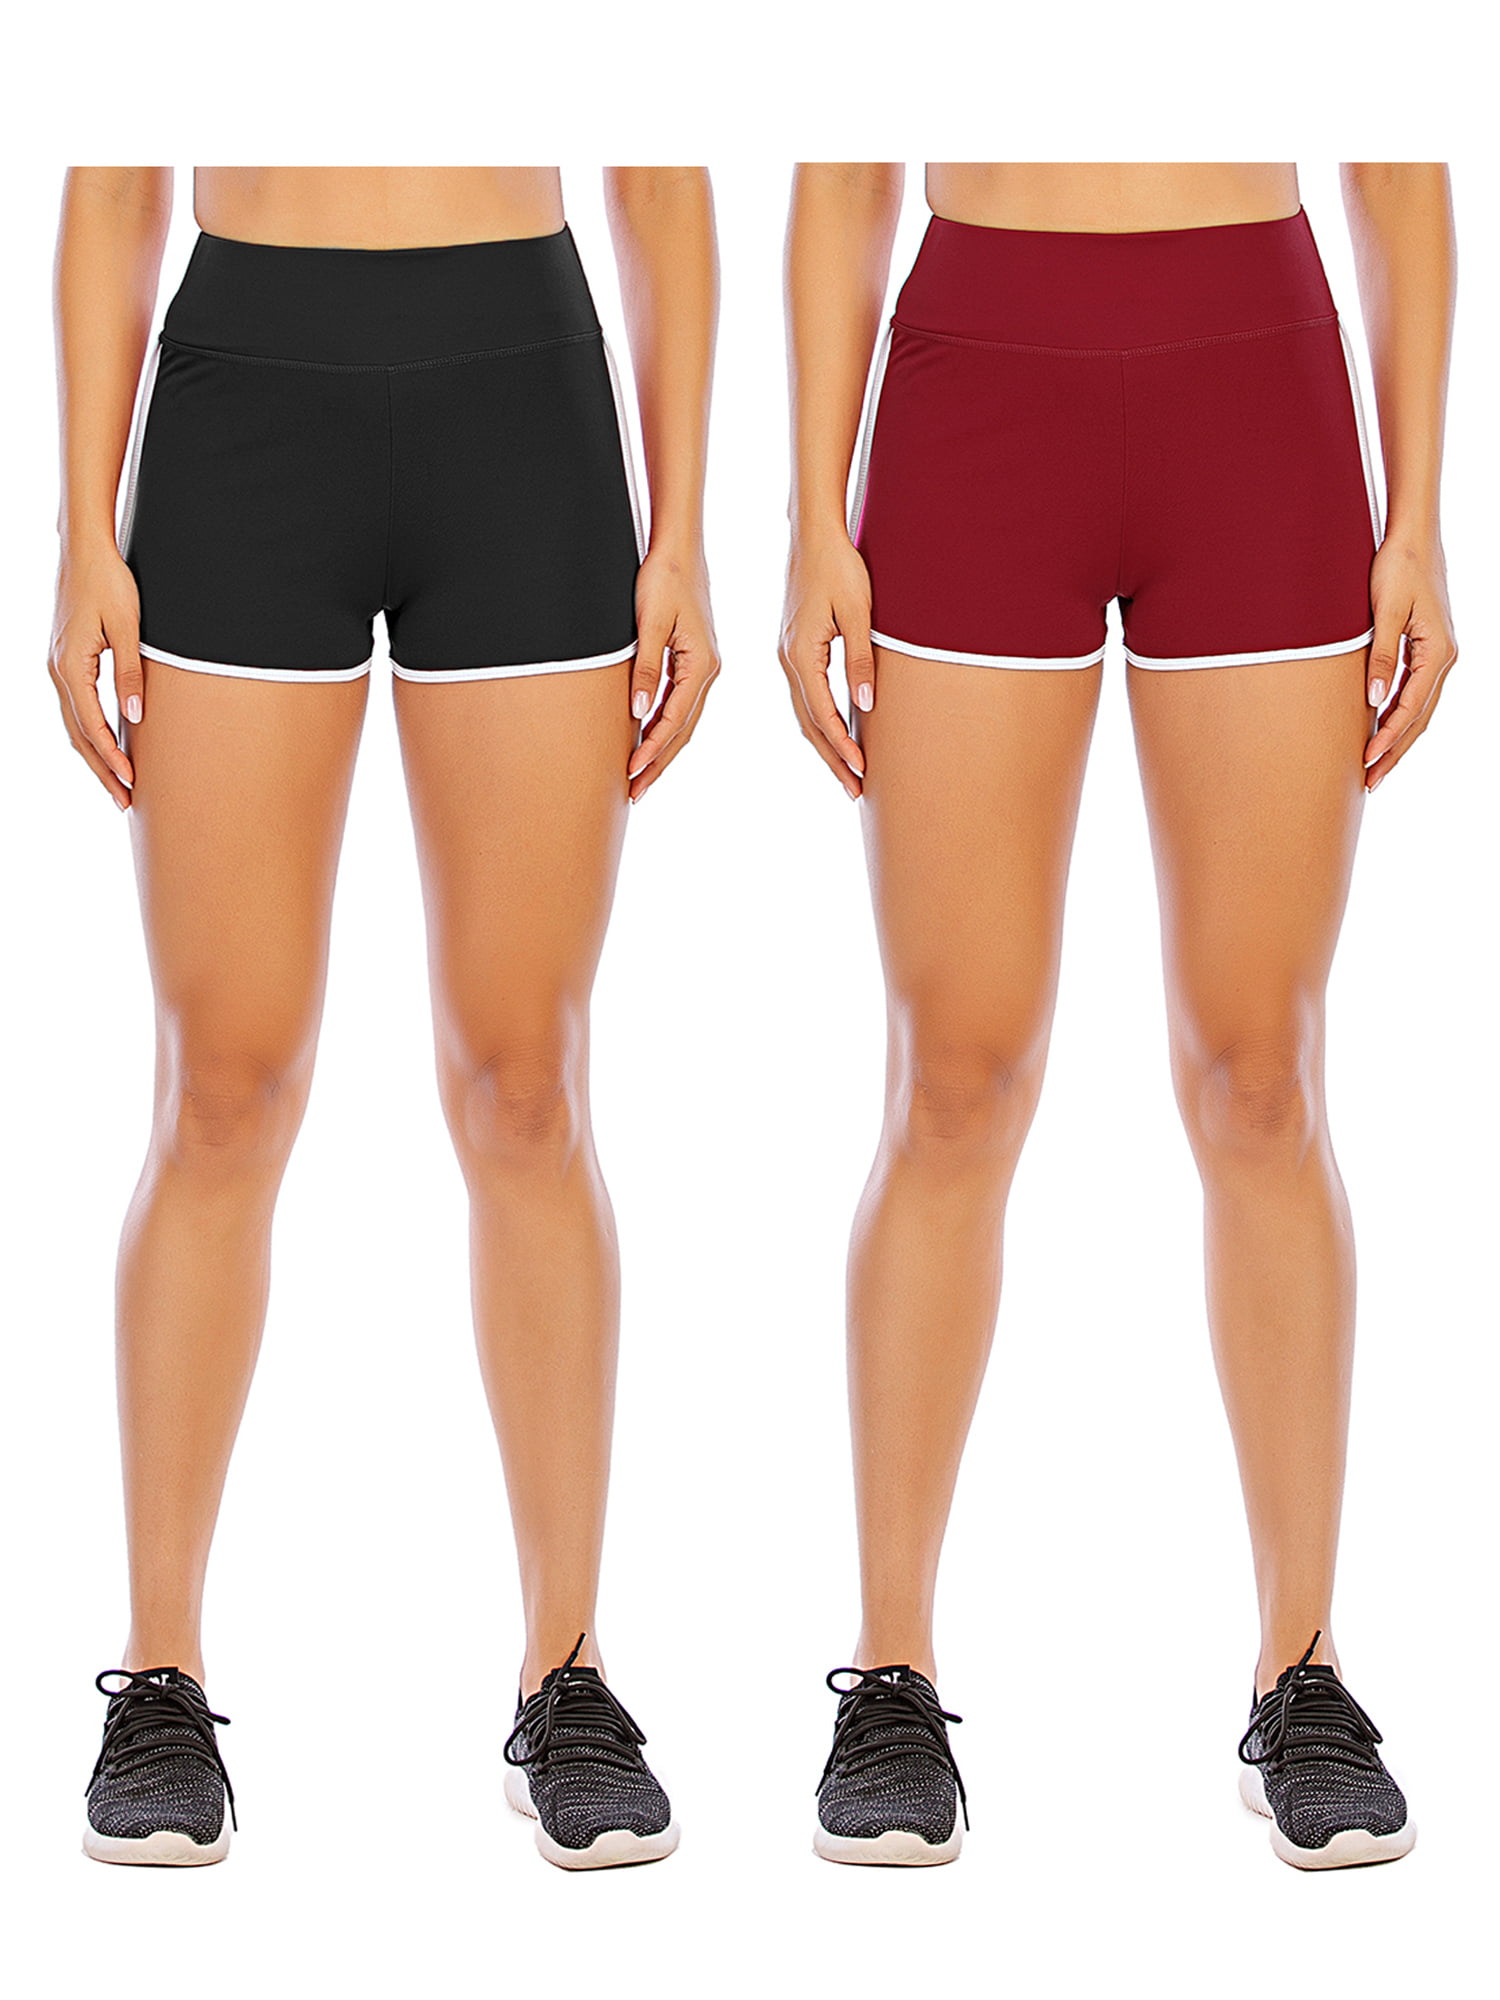 Womens Yoga Shorts Summer Casual Beach Sports Slim Gym Running Workout Hot Pants 